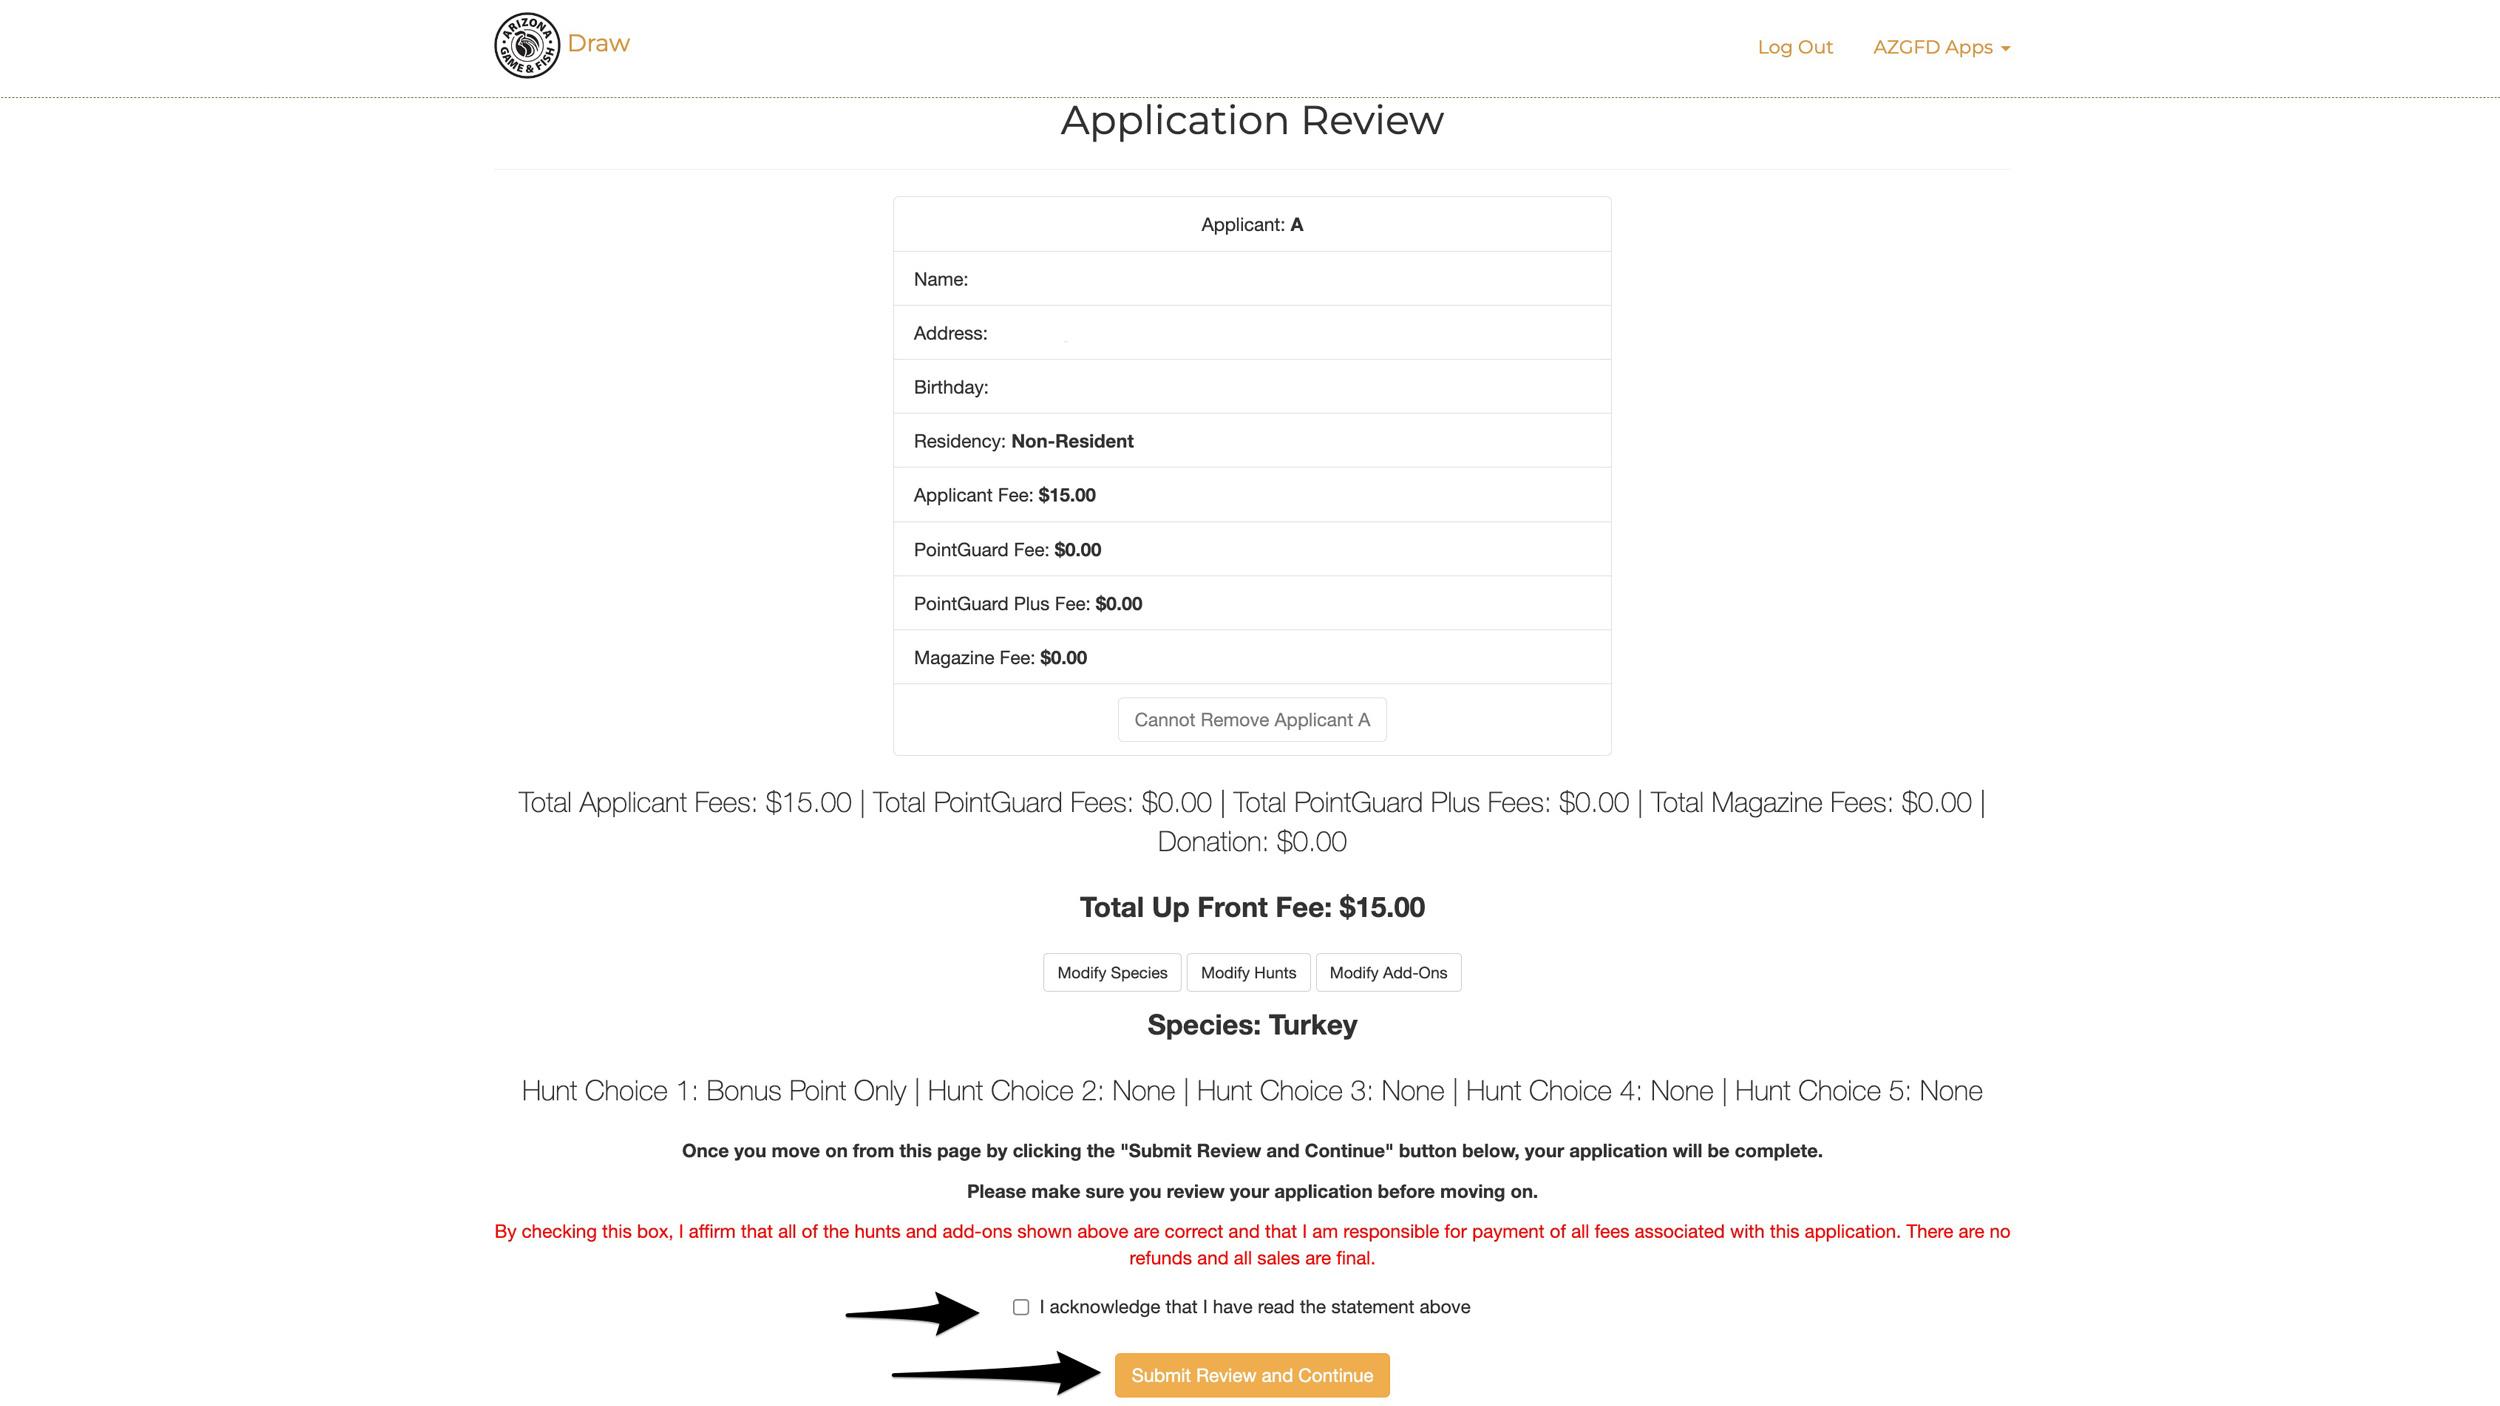 Arizona bonus point application review page